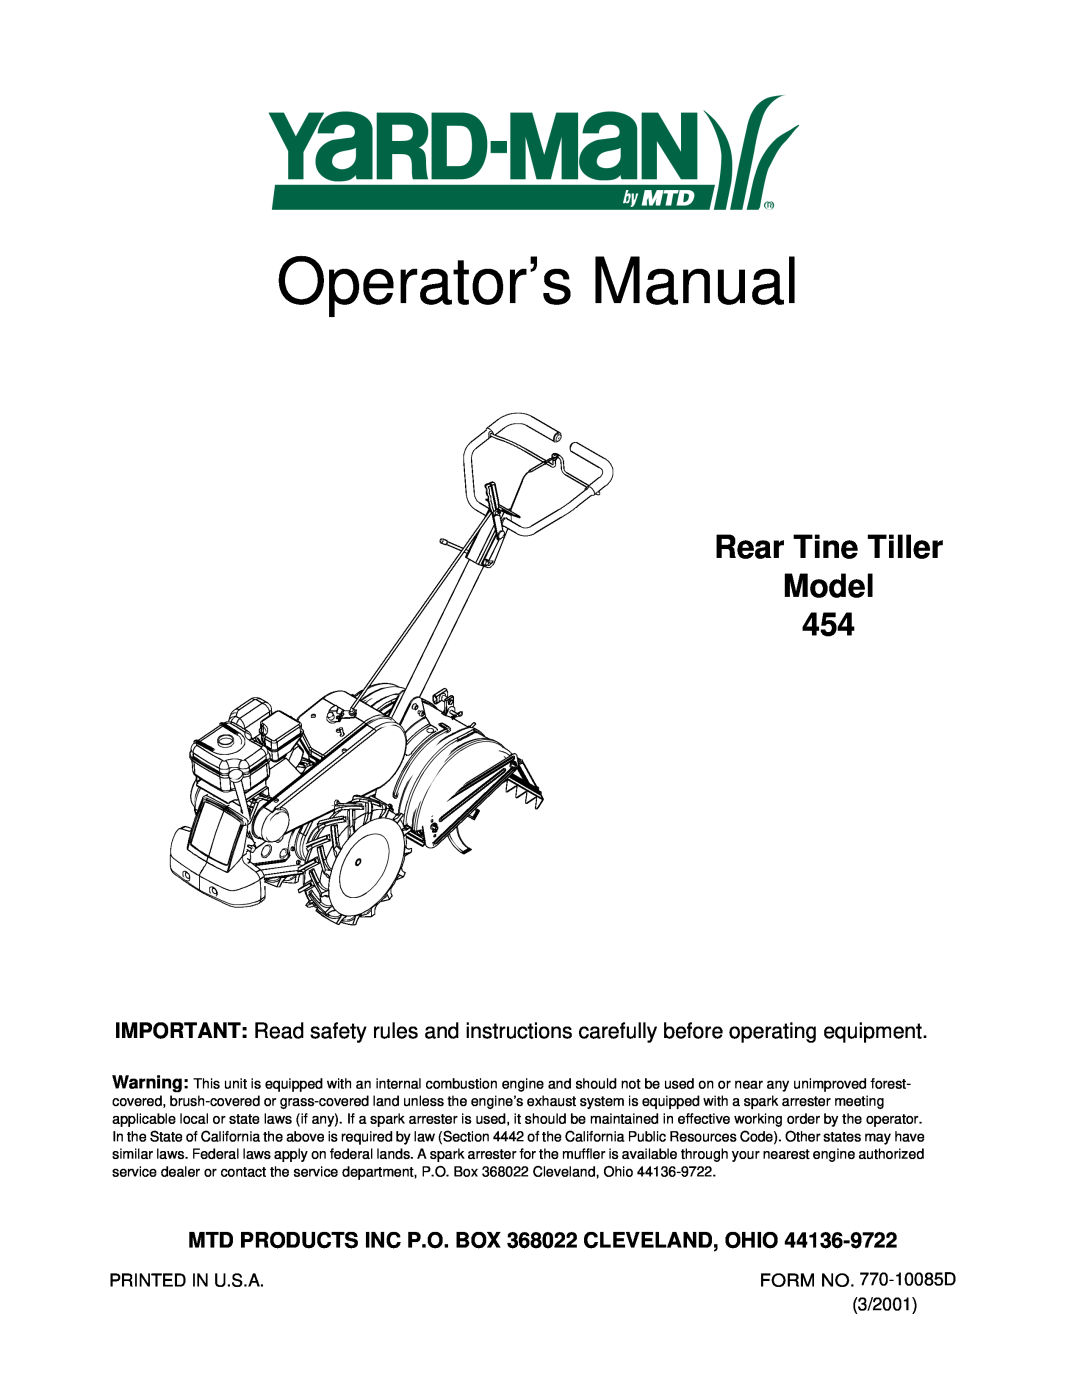 Yard-Man 454 manual Operator’s Manual, Rear Tine Tiller Model, MTD PRODUCTS INC P.O. BOX 368022 CLEVELAND, OHIO 